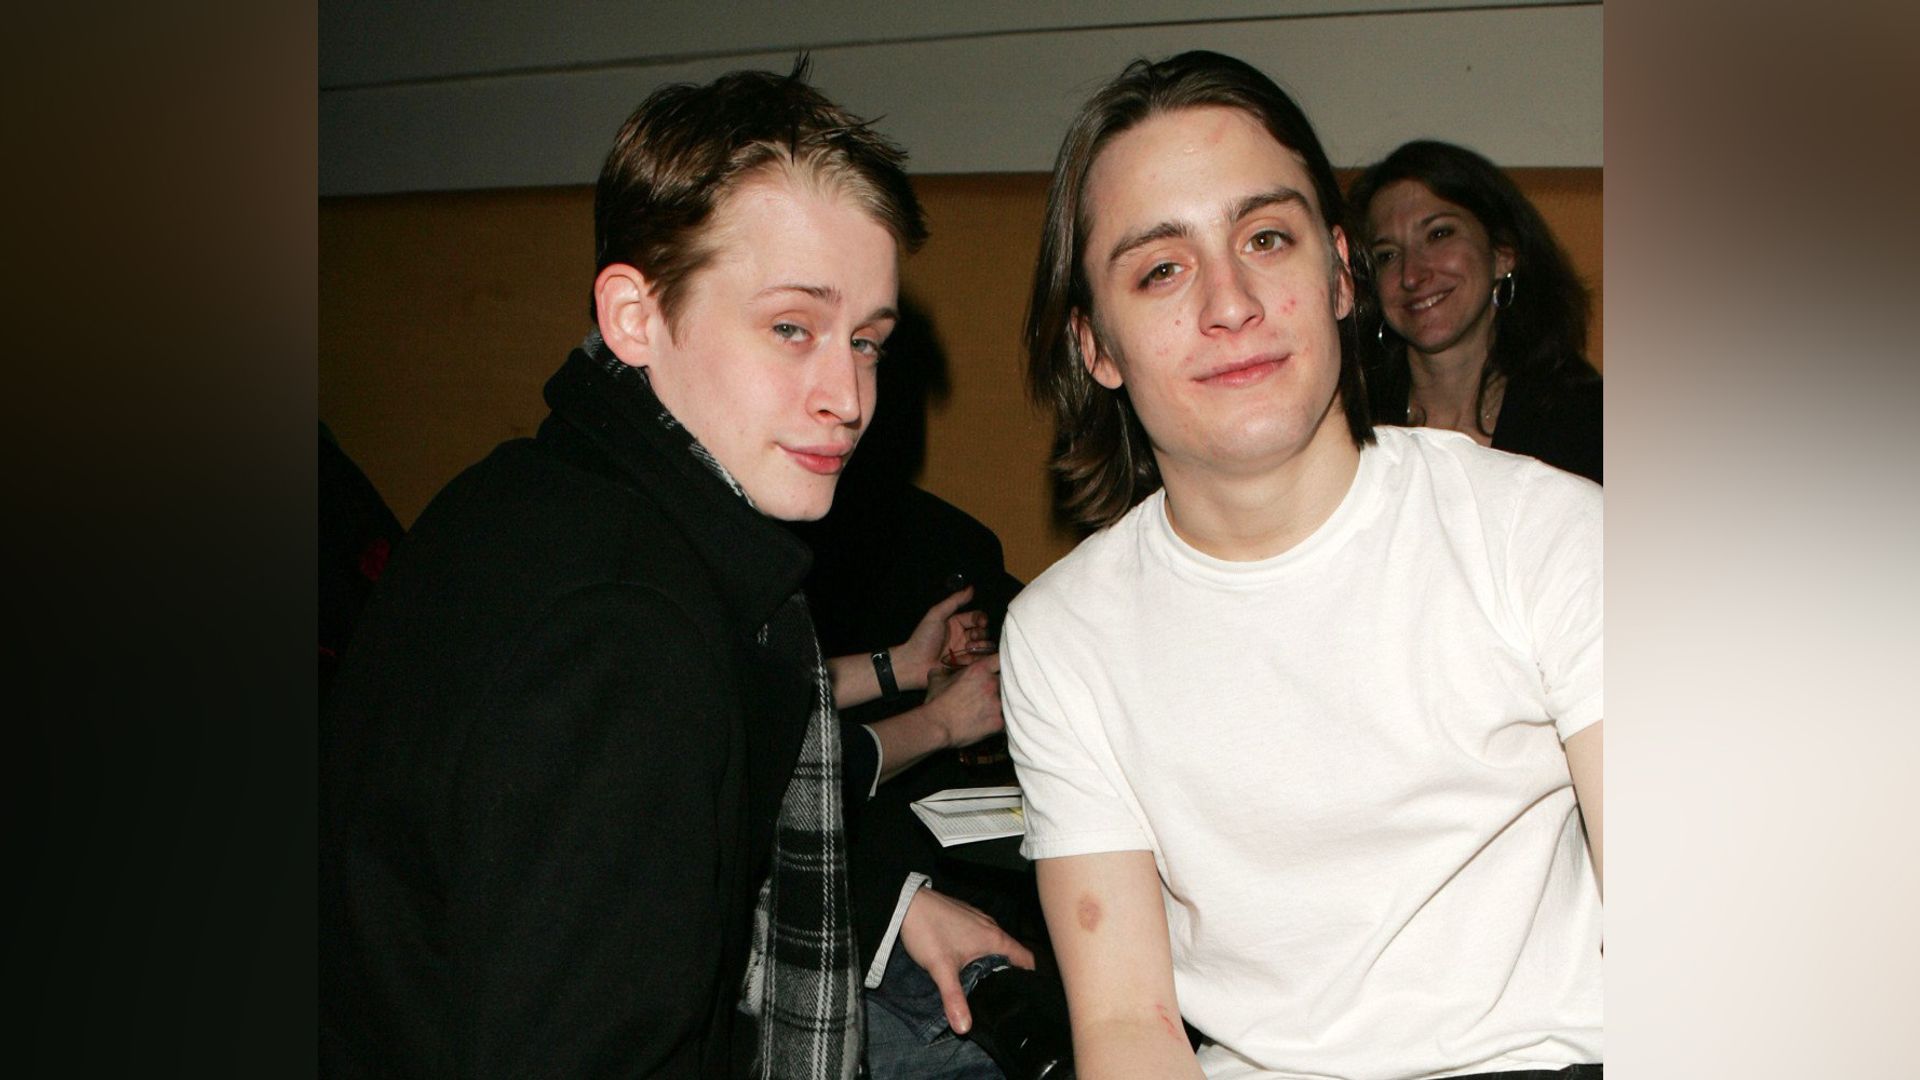 Kieran Culkin with his brother Macaulay in his youth